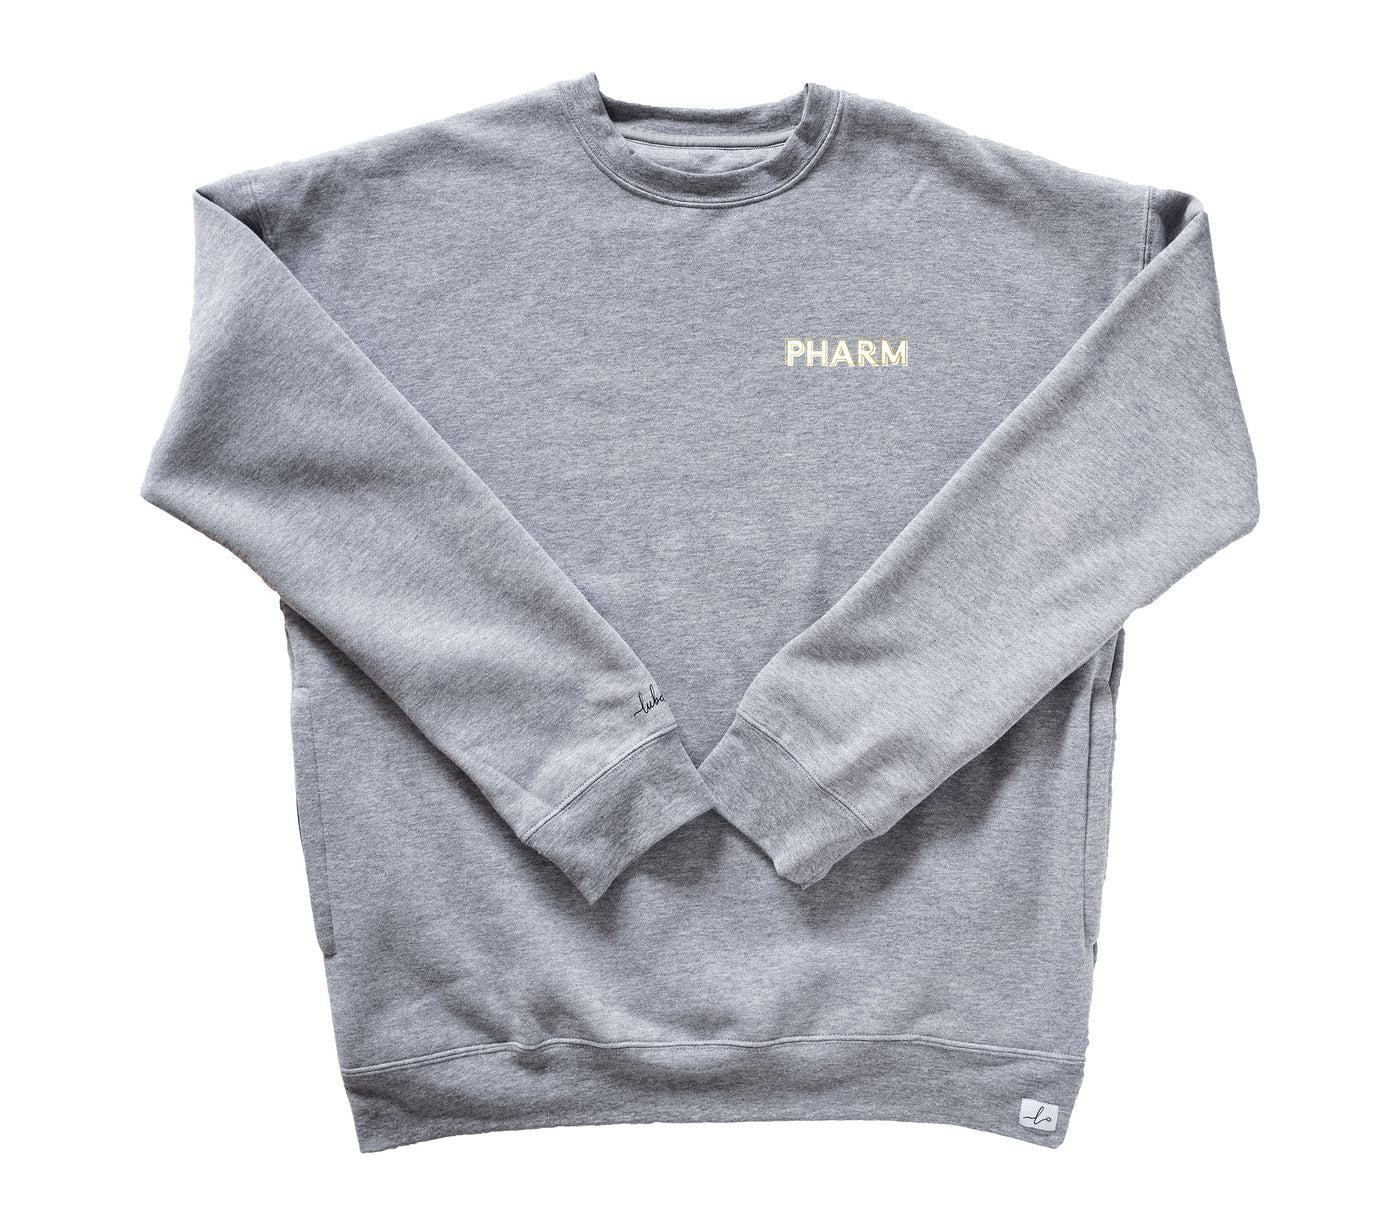 Pharm Creds - Pocketed Crew Sweatshirt